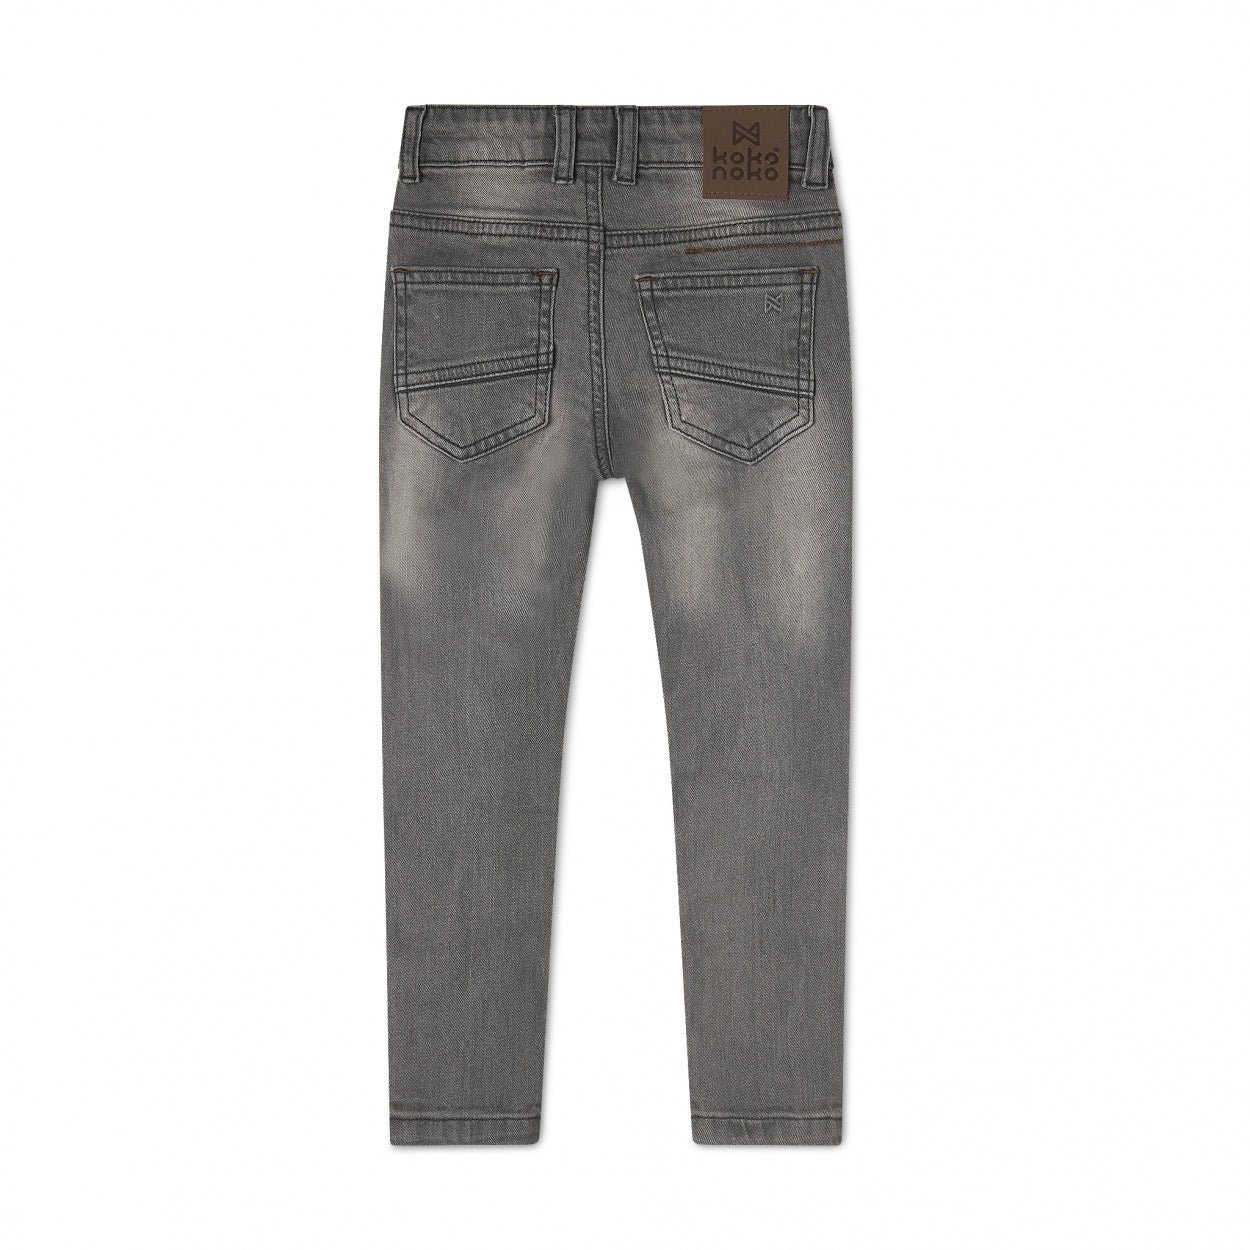 Koko Noko Boys Nox jeans Grey jeans WN822